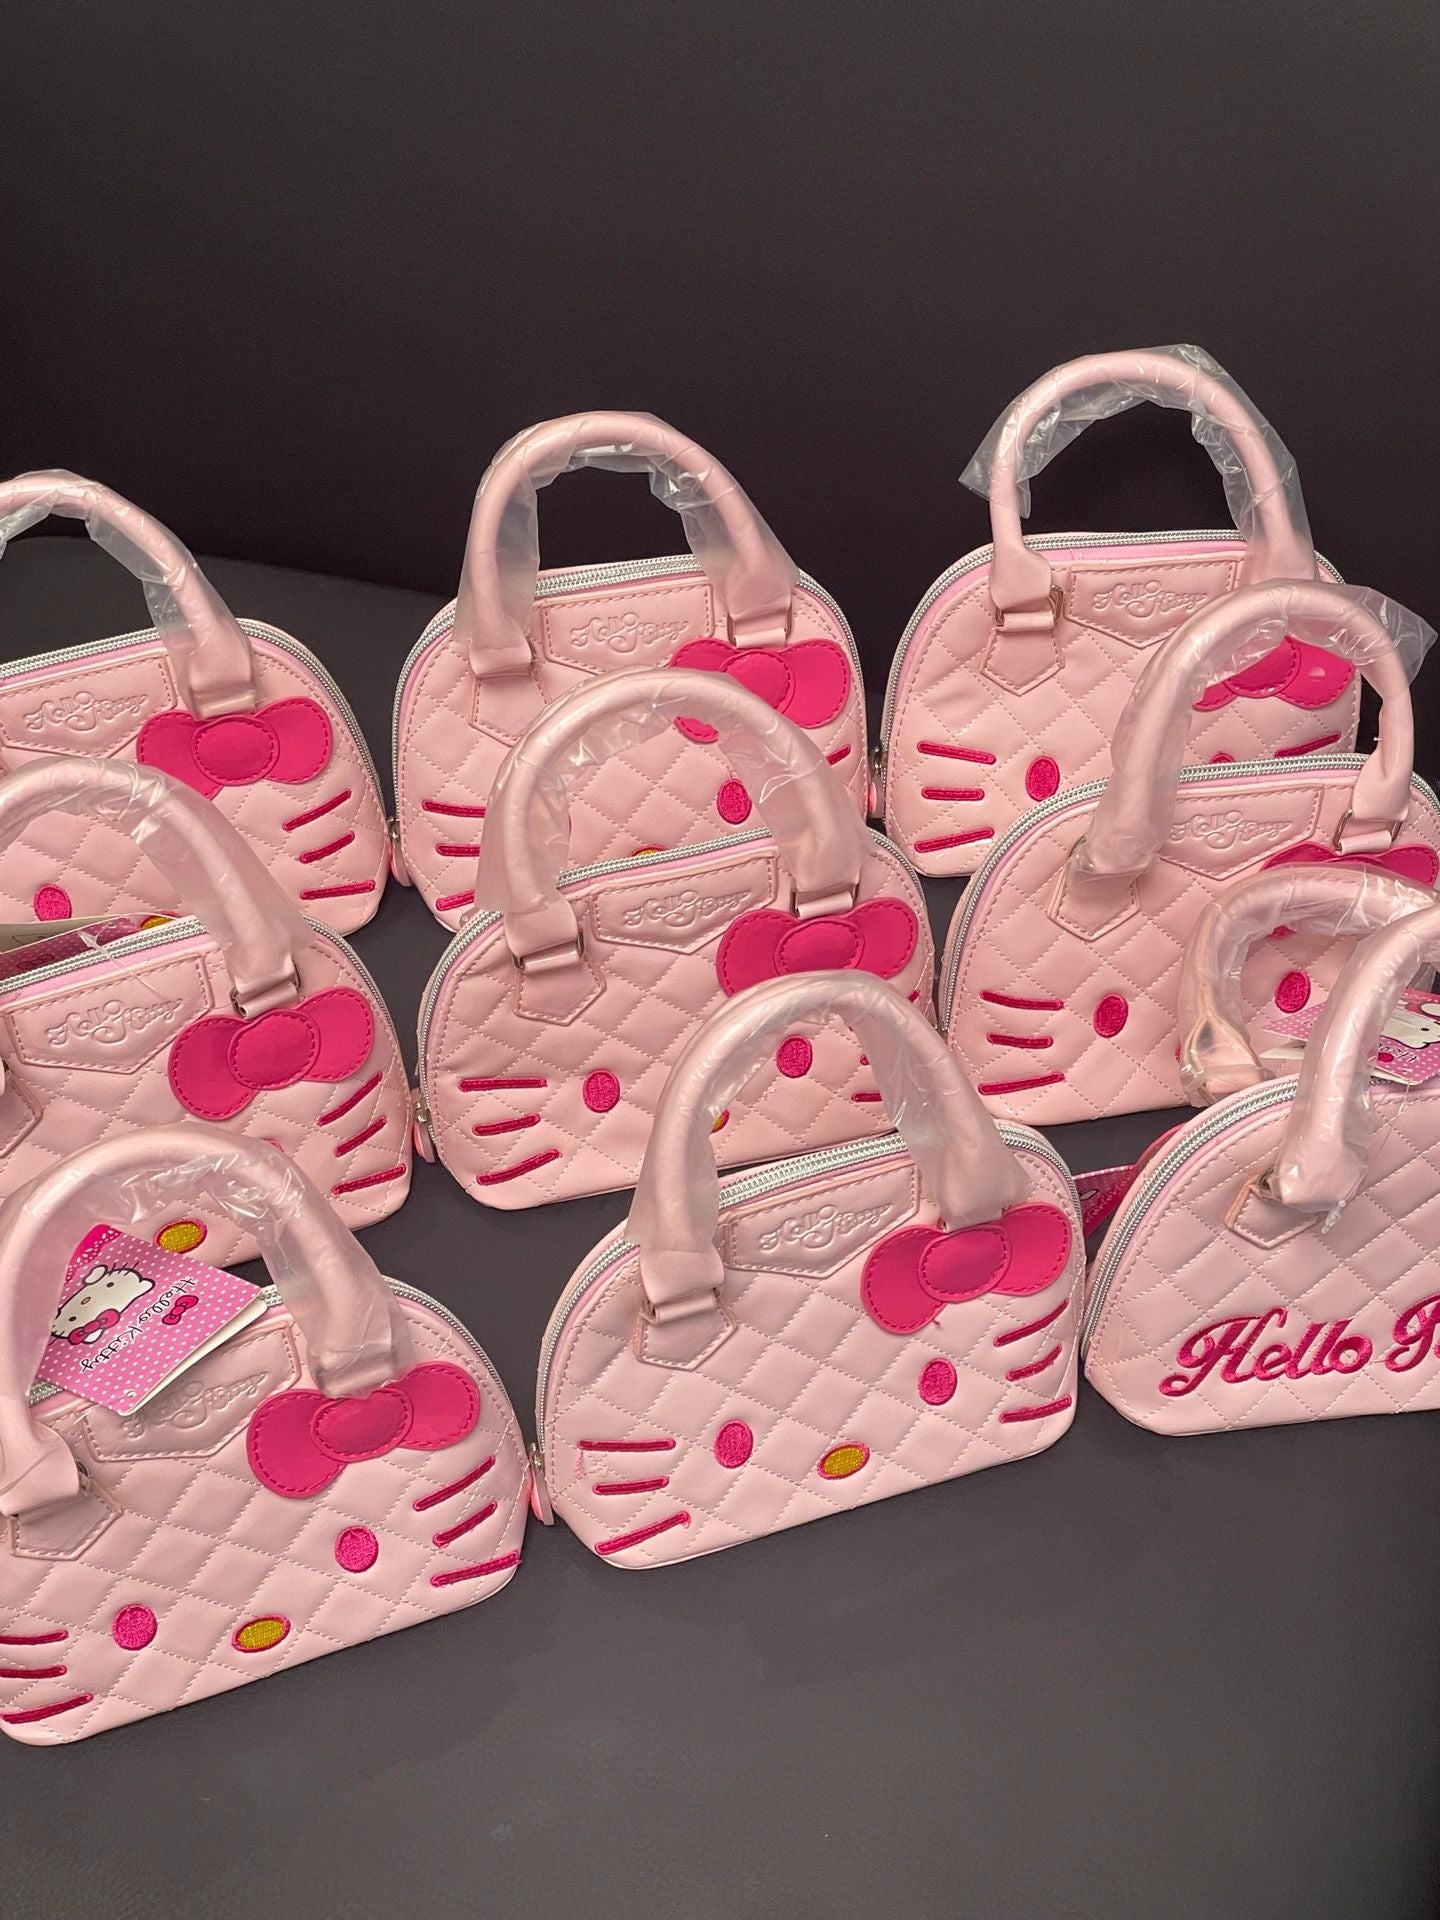 Hellokitty Women Fashion Handbag Purses Crossbody PU Leather Satchel Shoulder Messenger Bags Tote Purse